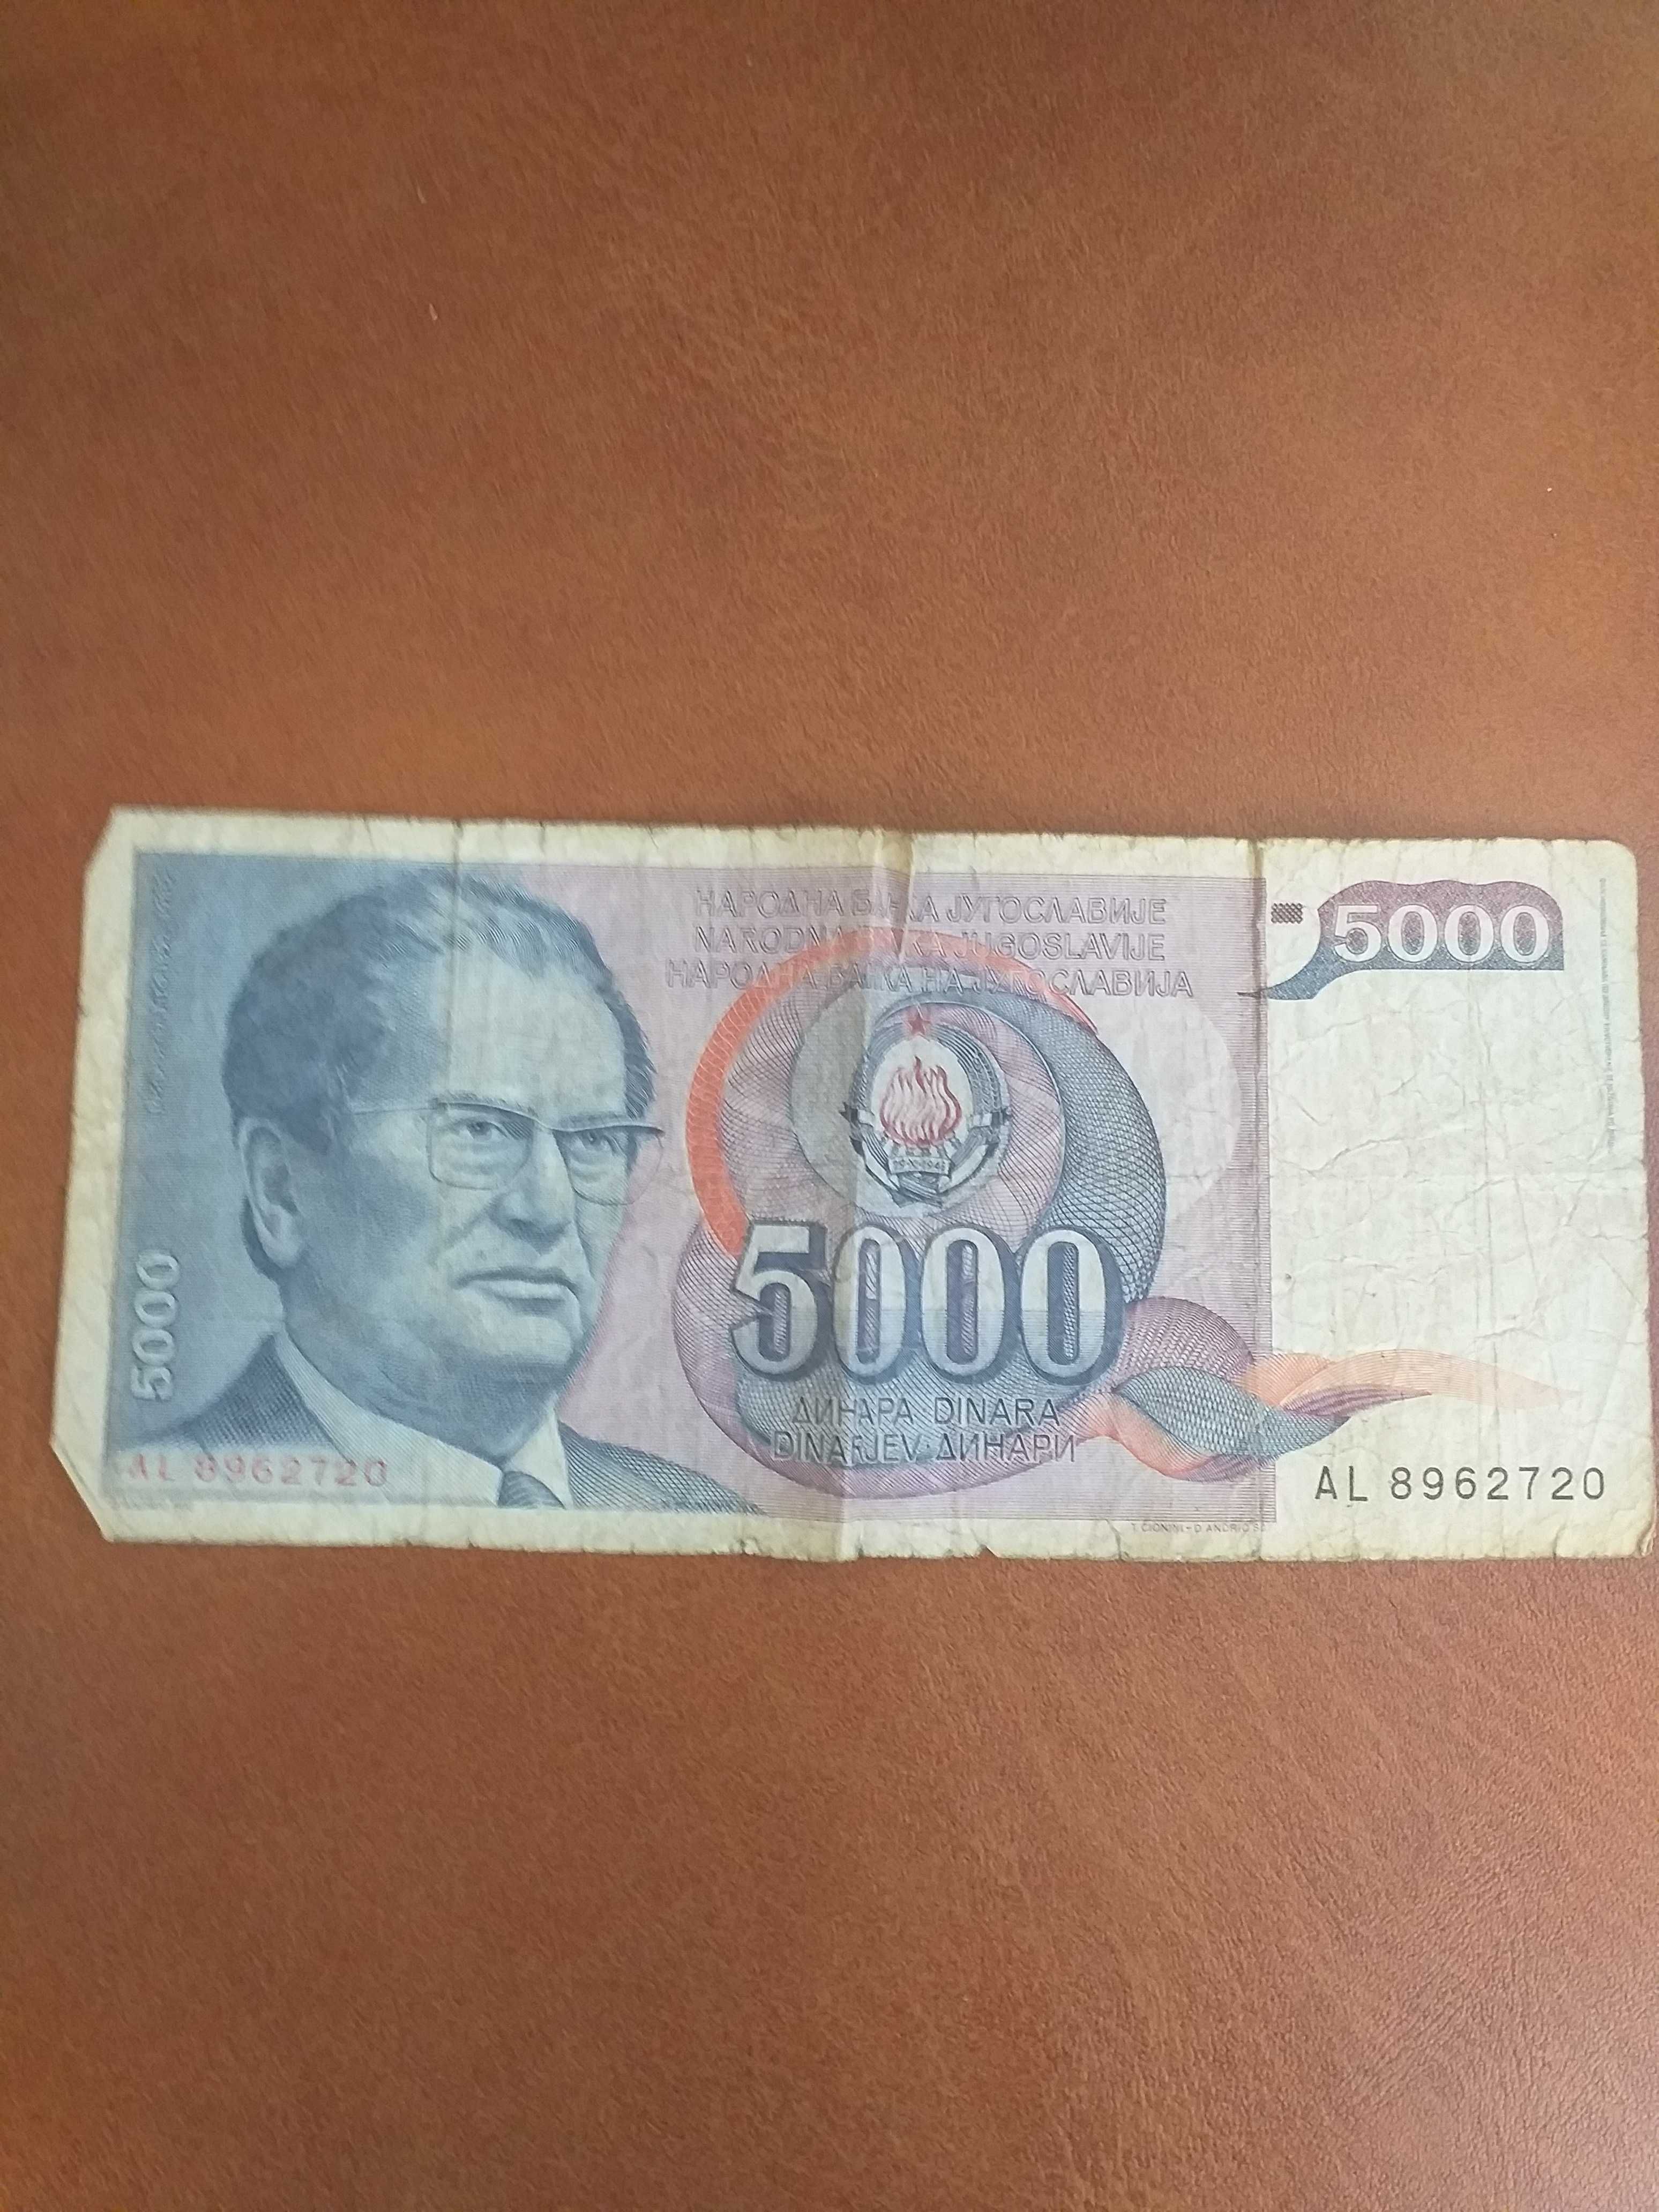 Bancnote vechi Iugoslavia